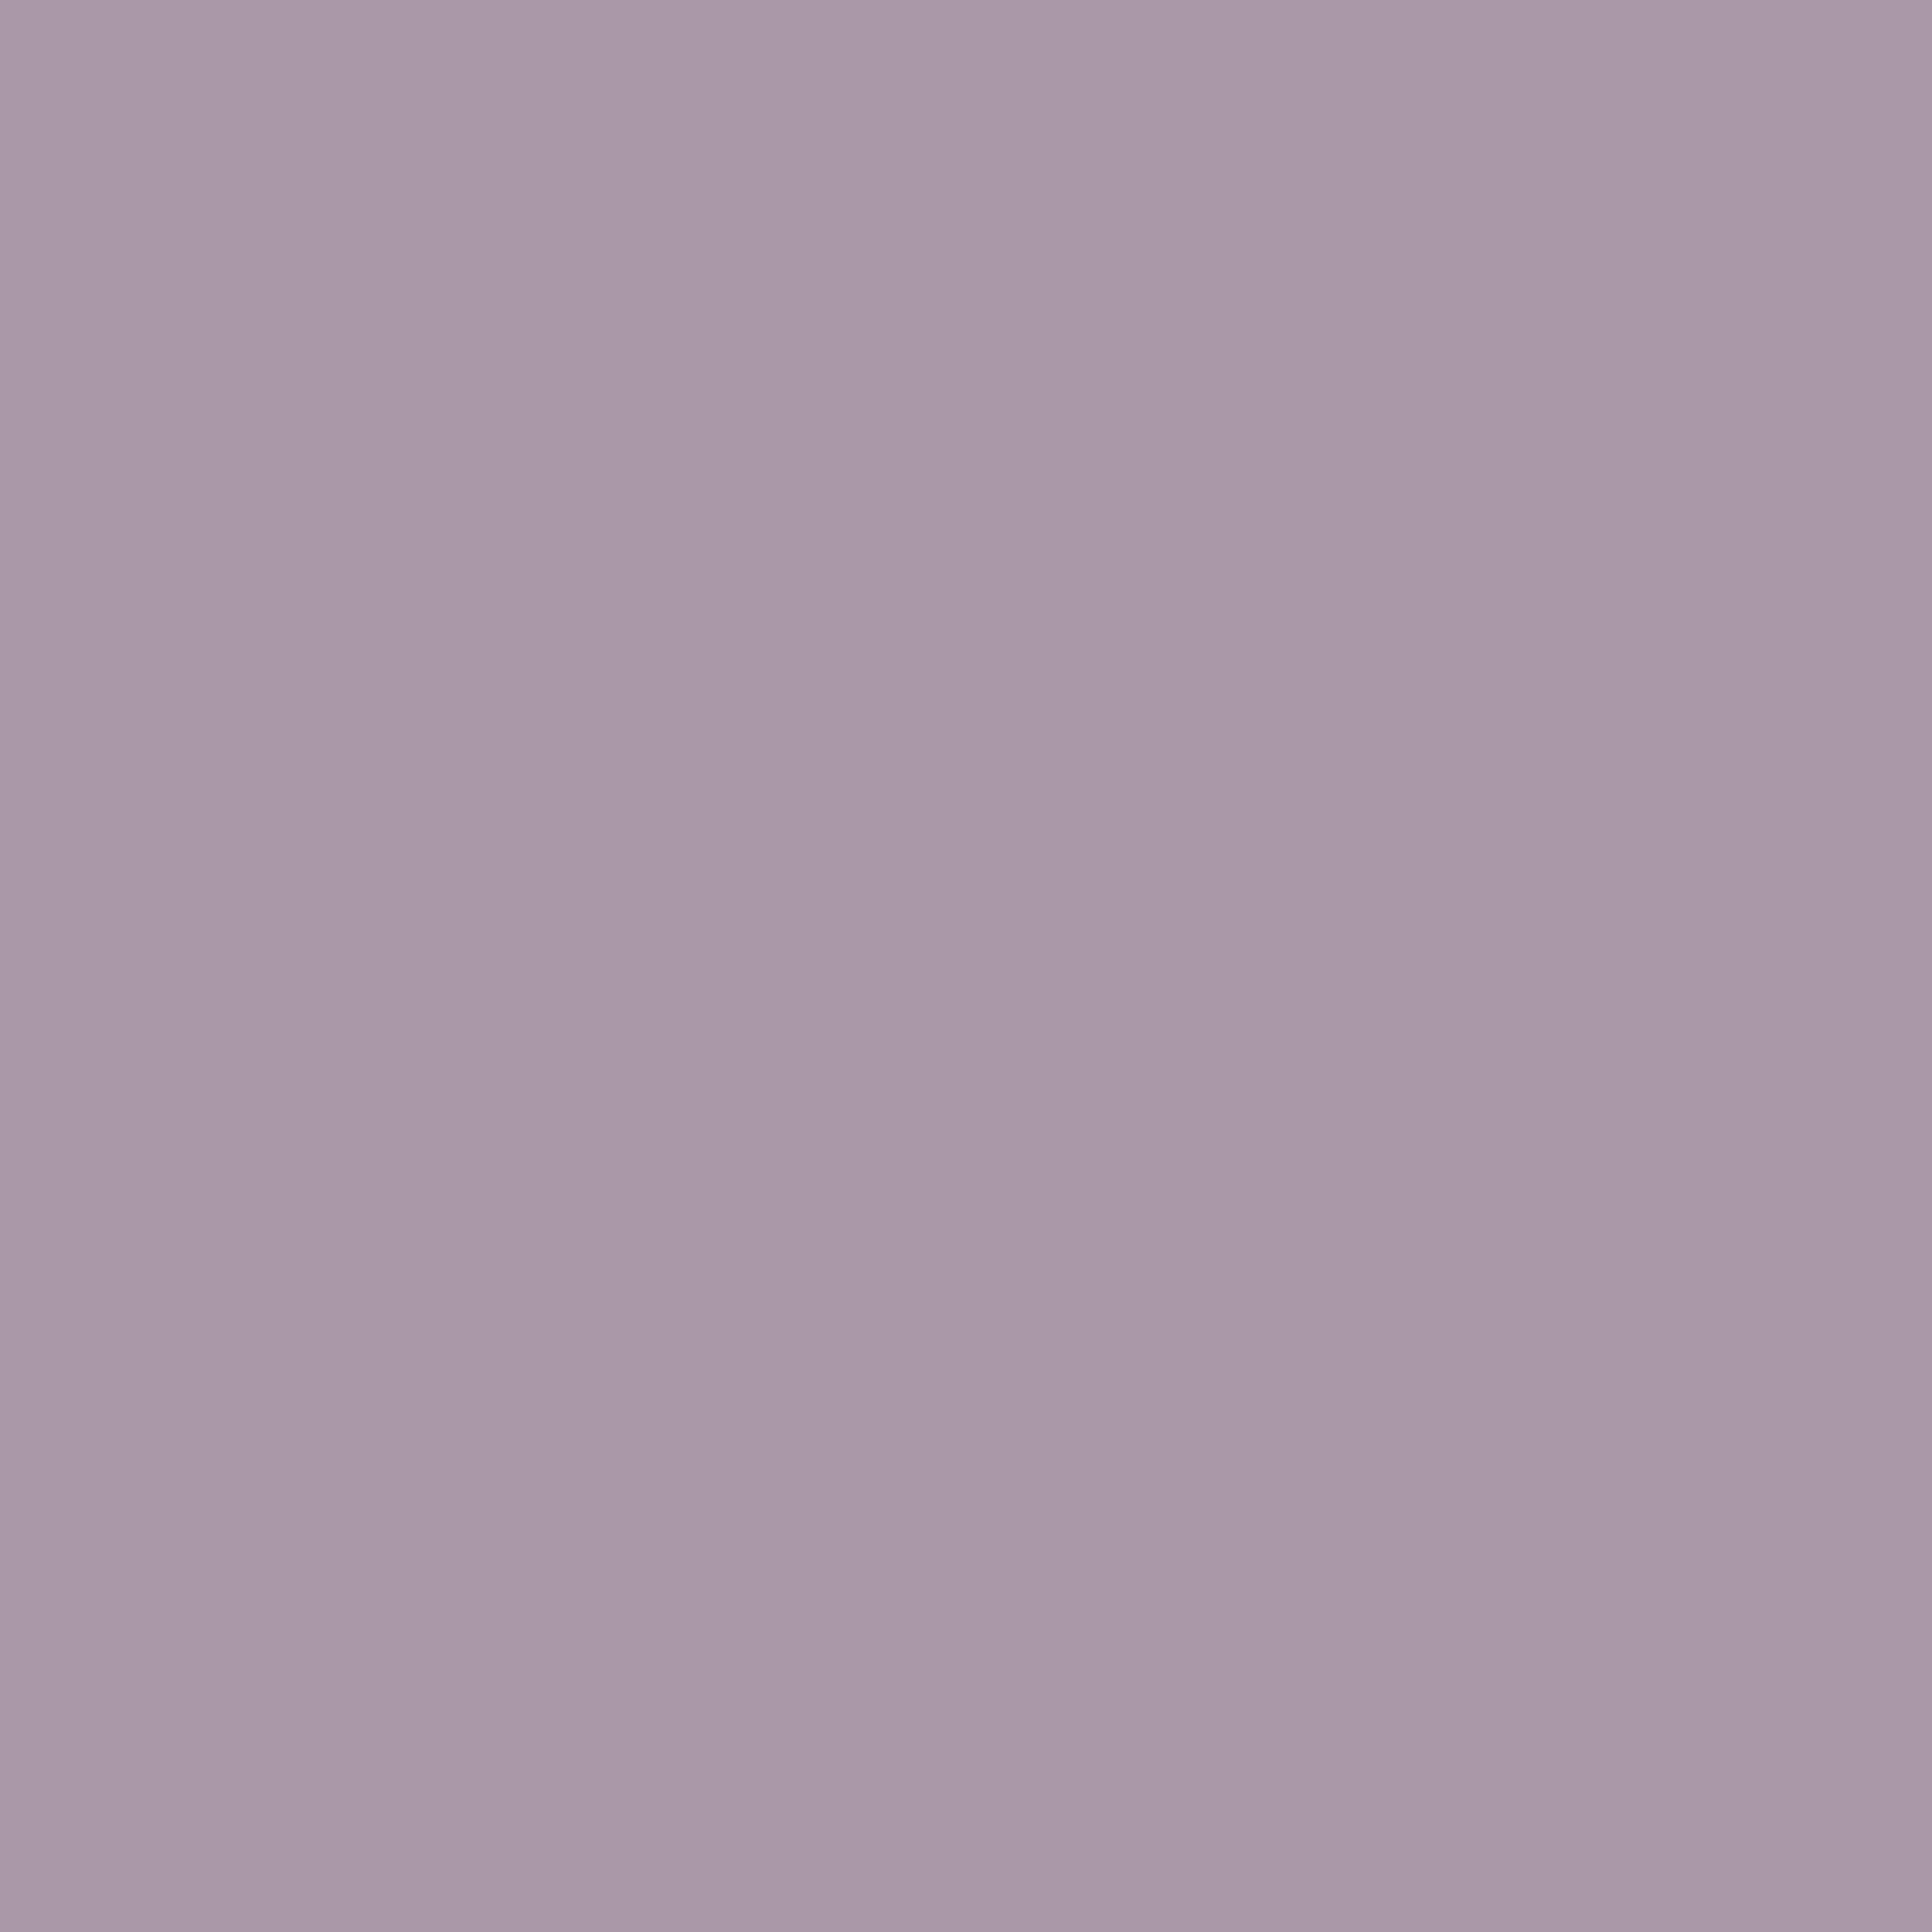 3600x3600 Rose Quartz Solid Color Background